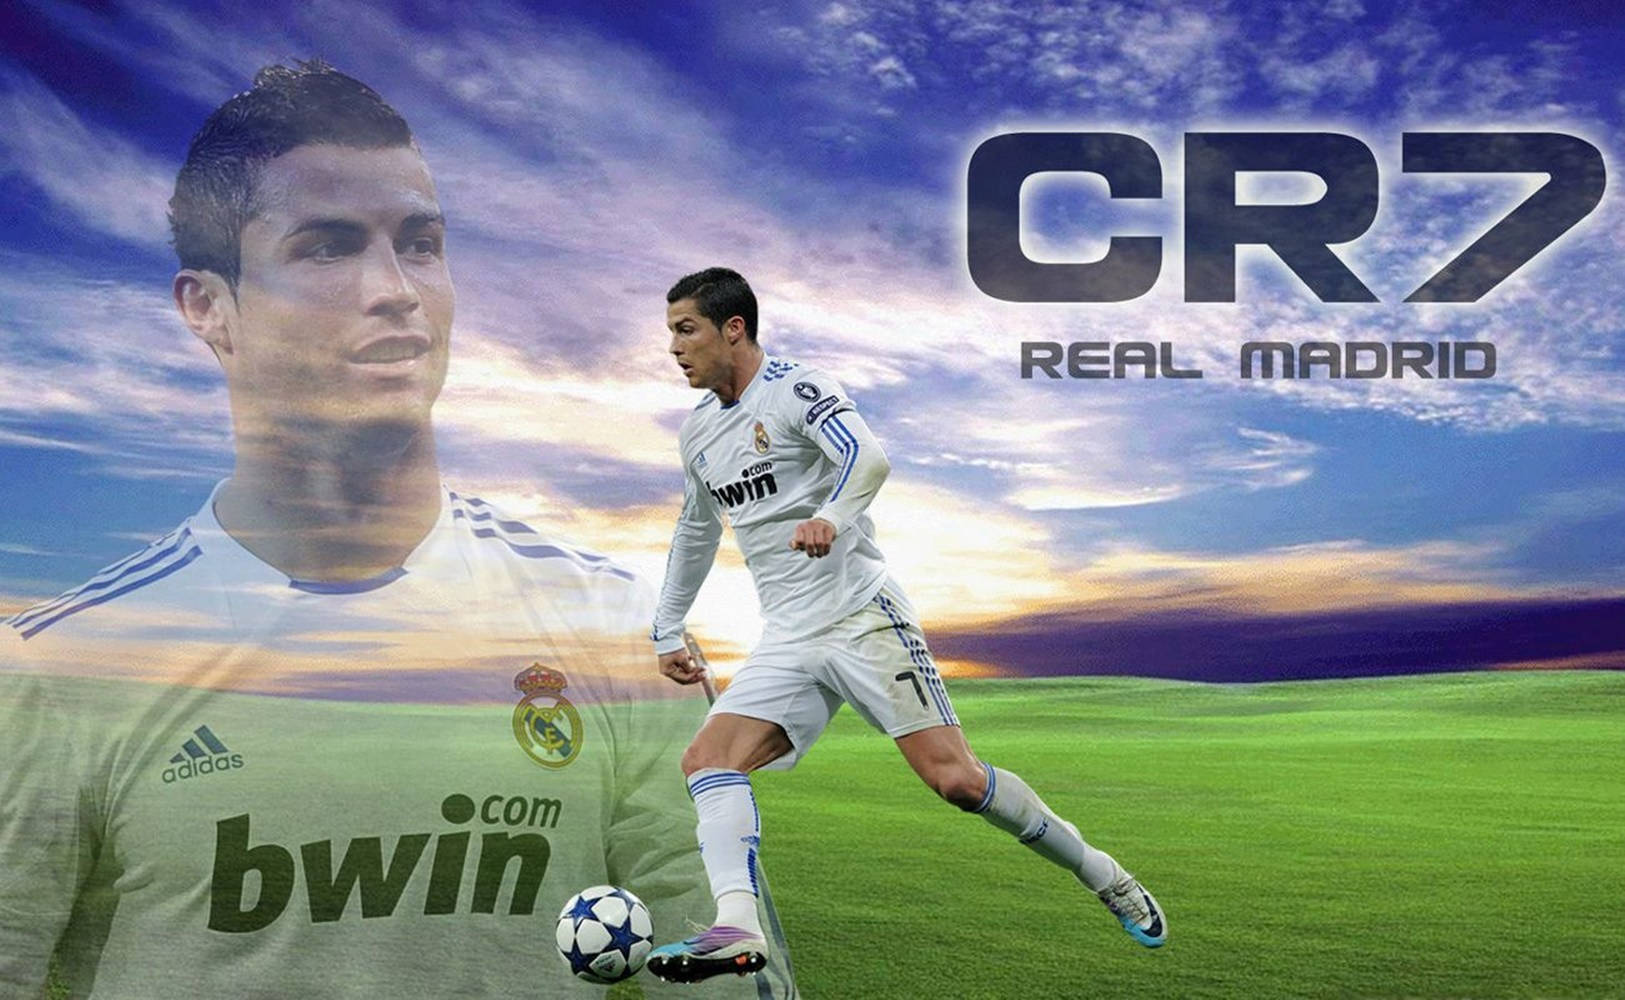 Cristianoronaldo Cool Real Madrid Fußballfeld Wallpaper